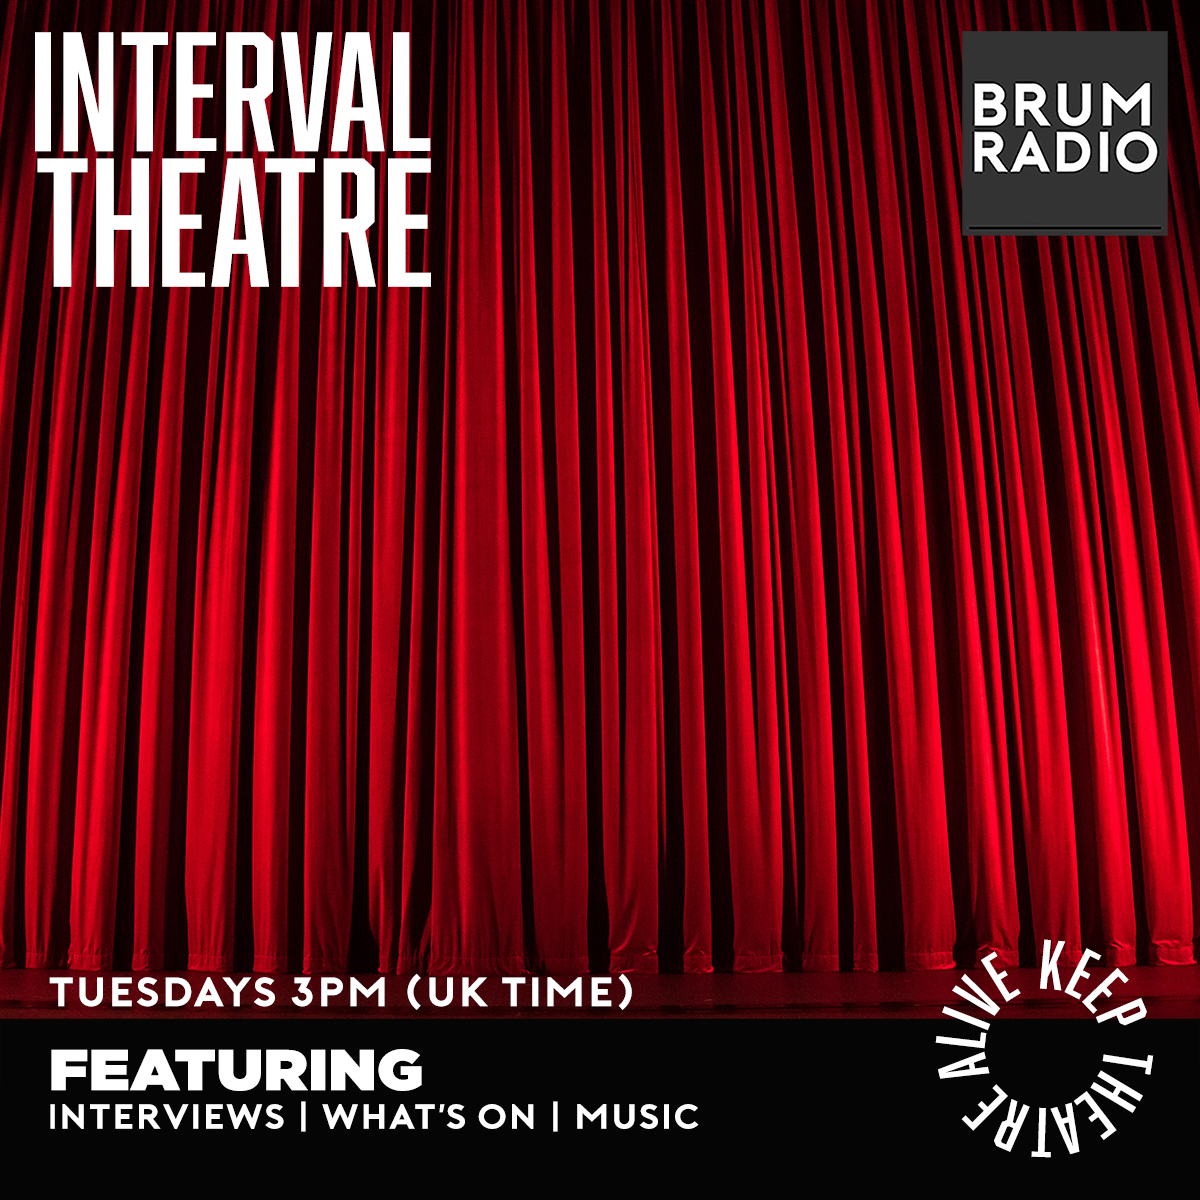 Listen back to Interval Theatre on @BrumRadio This week Sonia Sabri talks about Roshni @SoniaSabriCo at @BrumHippodrome. Listen here: mixcloud.com/BrumRadio/inte… #Birmingham #BrumHour